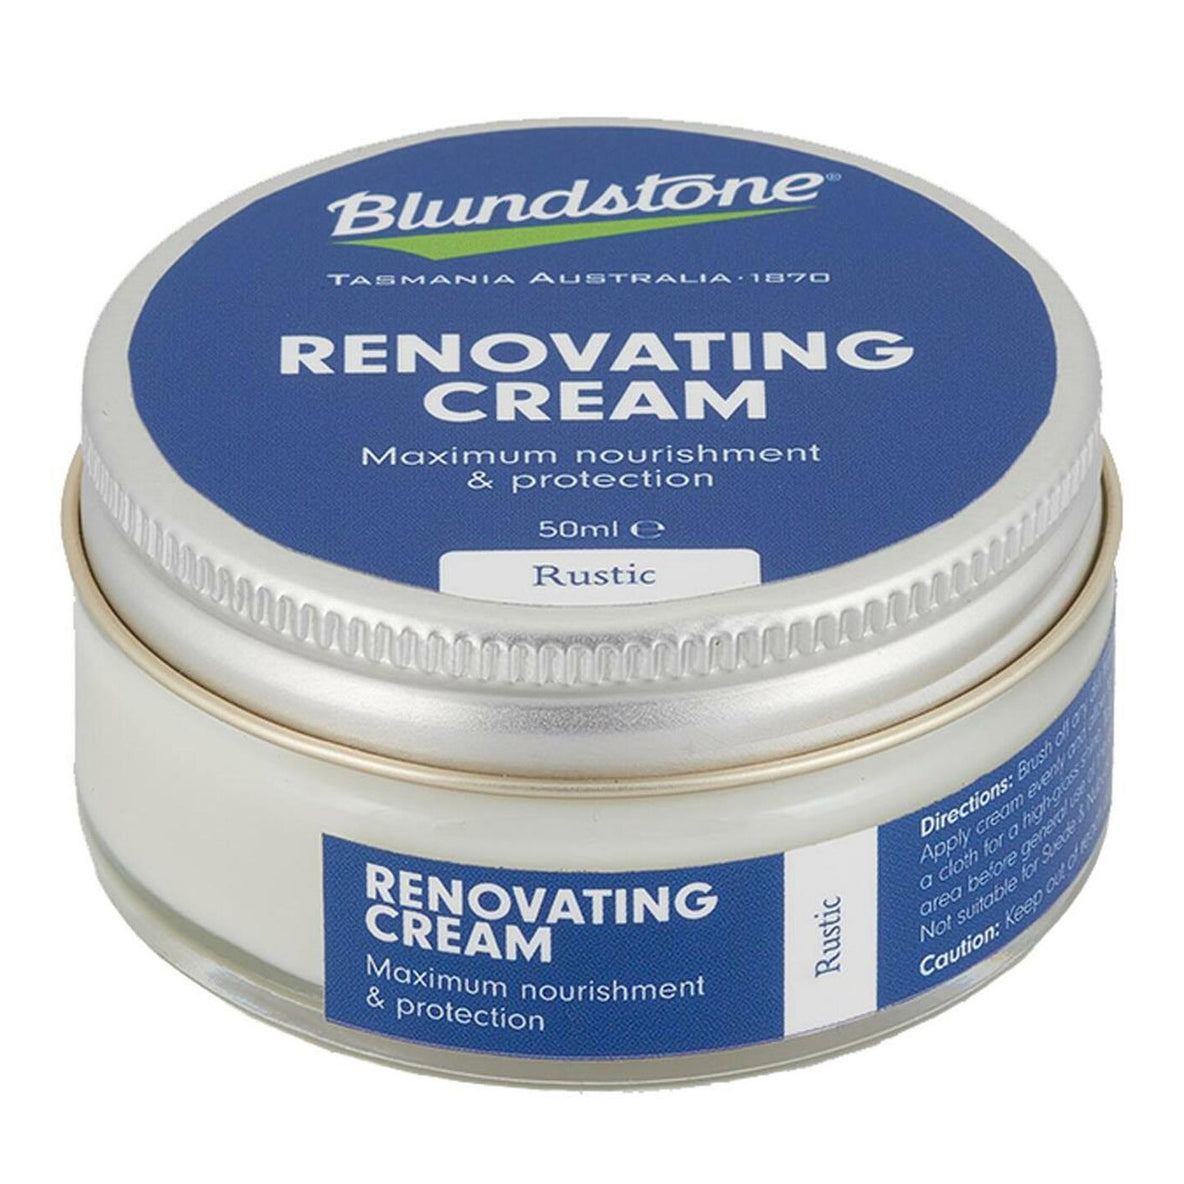 Blundstone Renovating Cream | Rustic